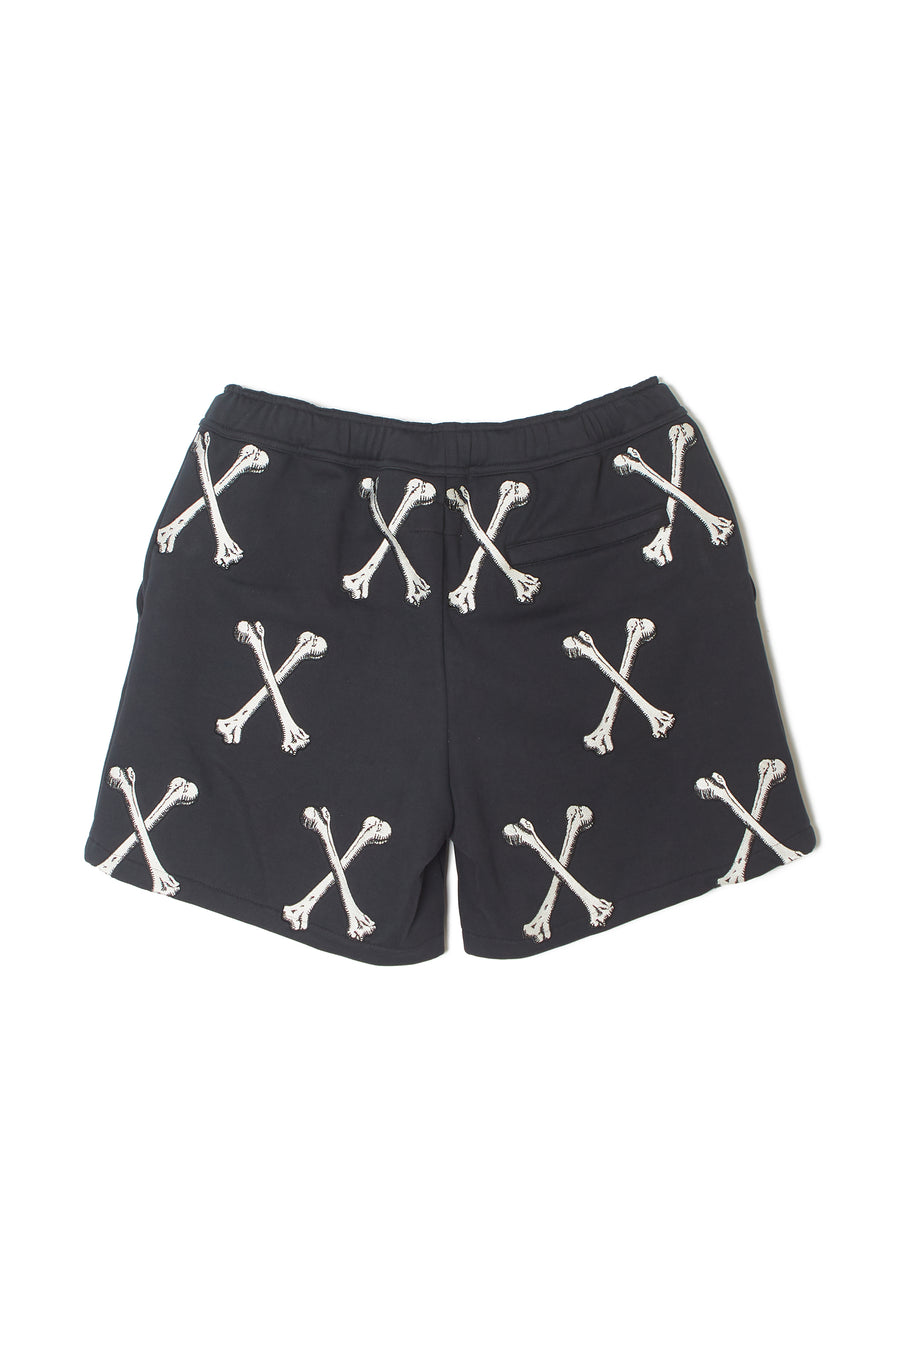 MAYO CROSS BONES Embroidery Sweat Shorts - BLACK